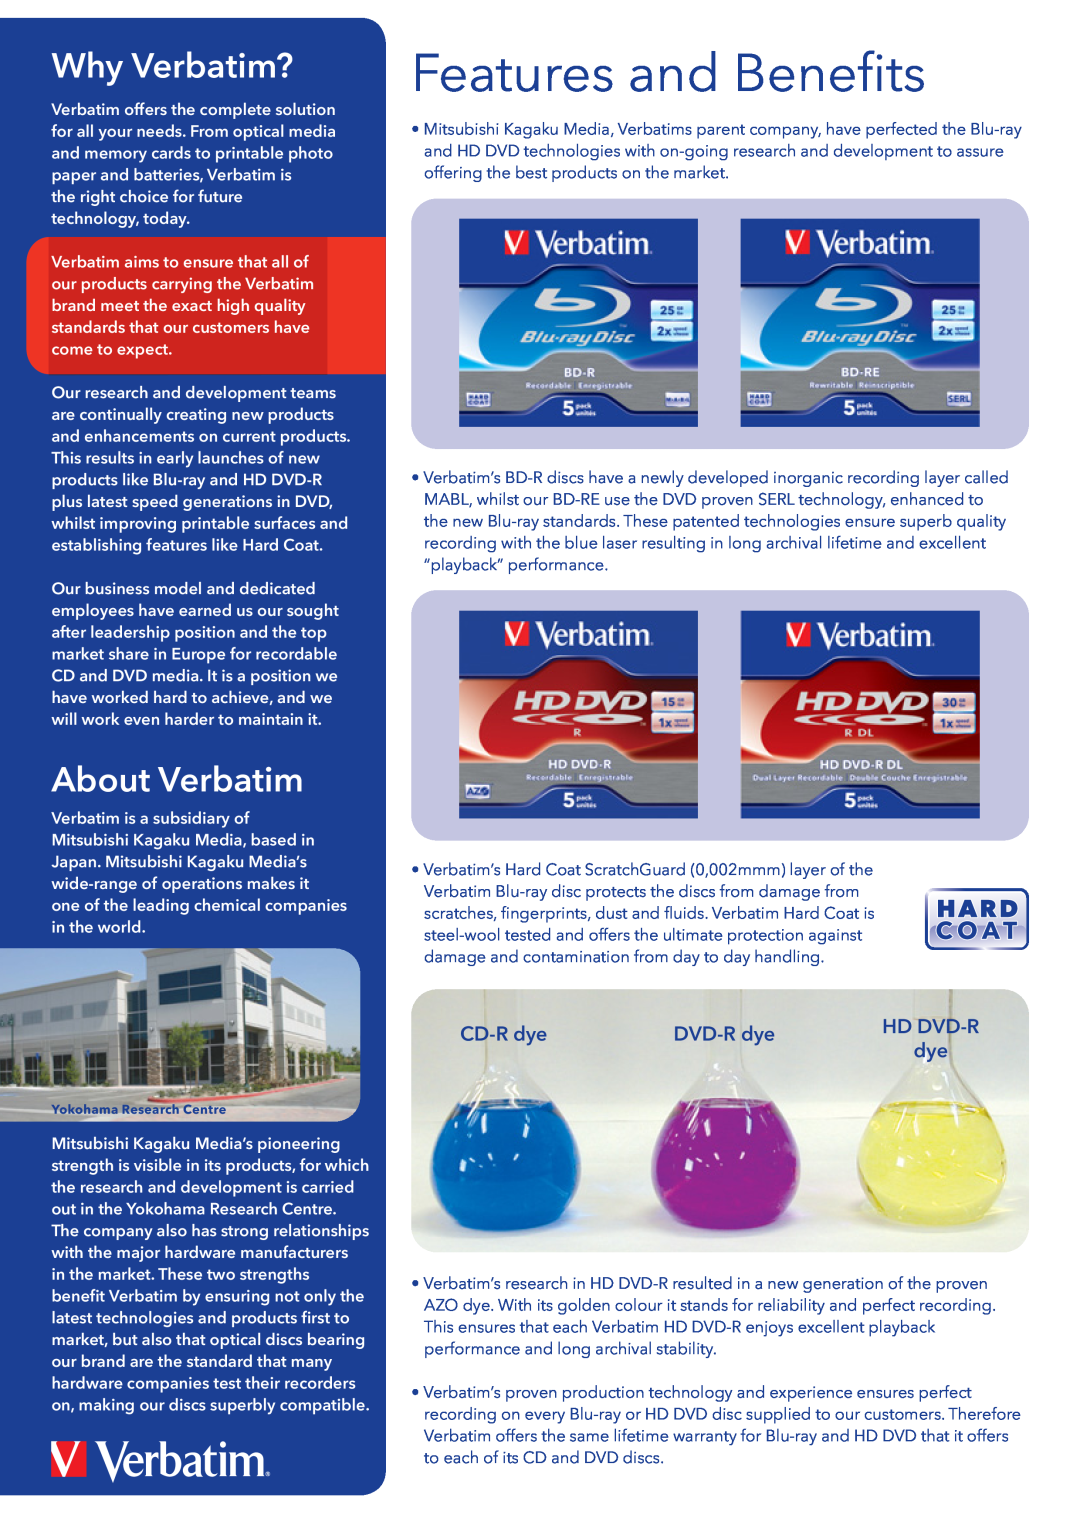 Verbatim Blu-ray HD DVD manual Features and Beneﬁts, Why Verbatim?, About Verbatim, CD-R dye, DVD-R dye, Hd Dvd-R 